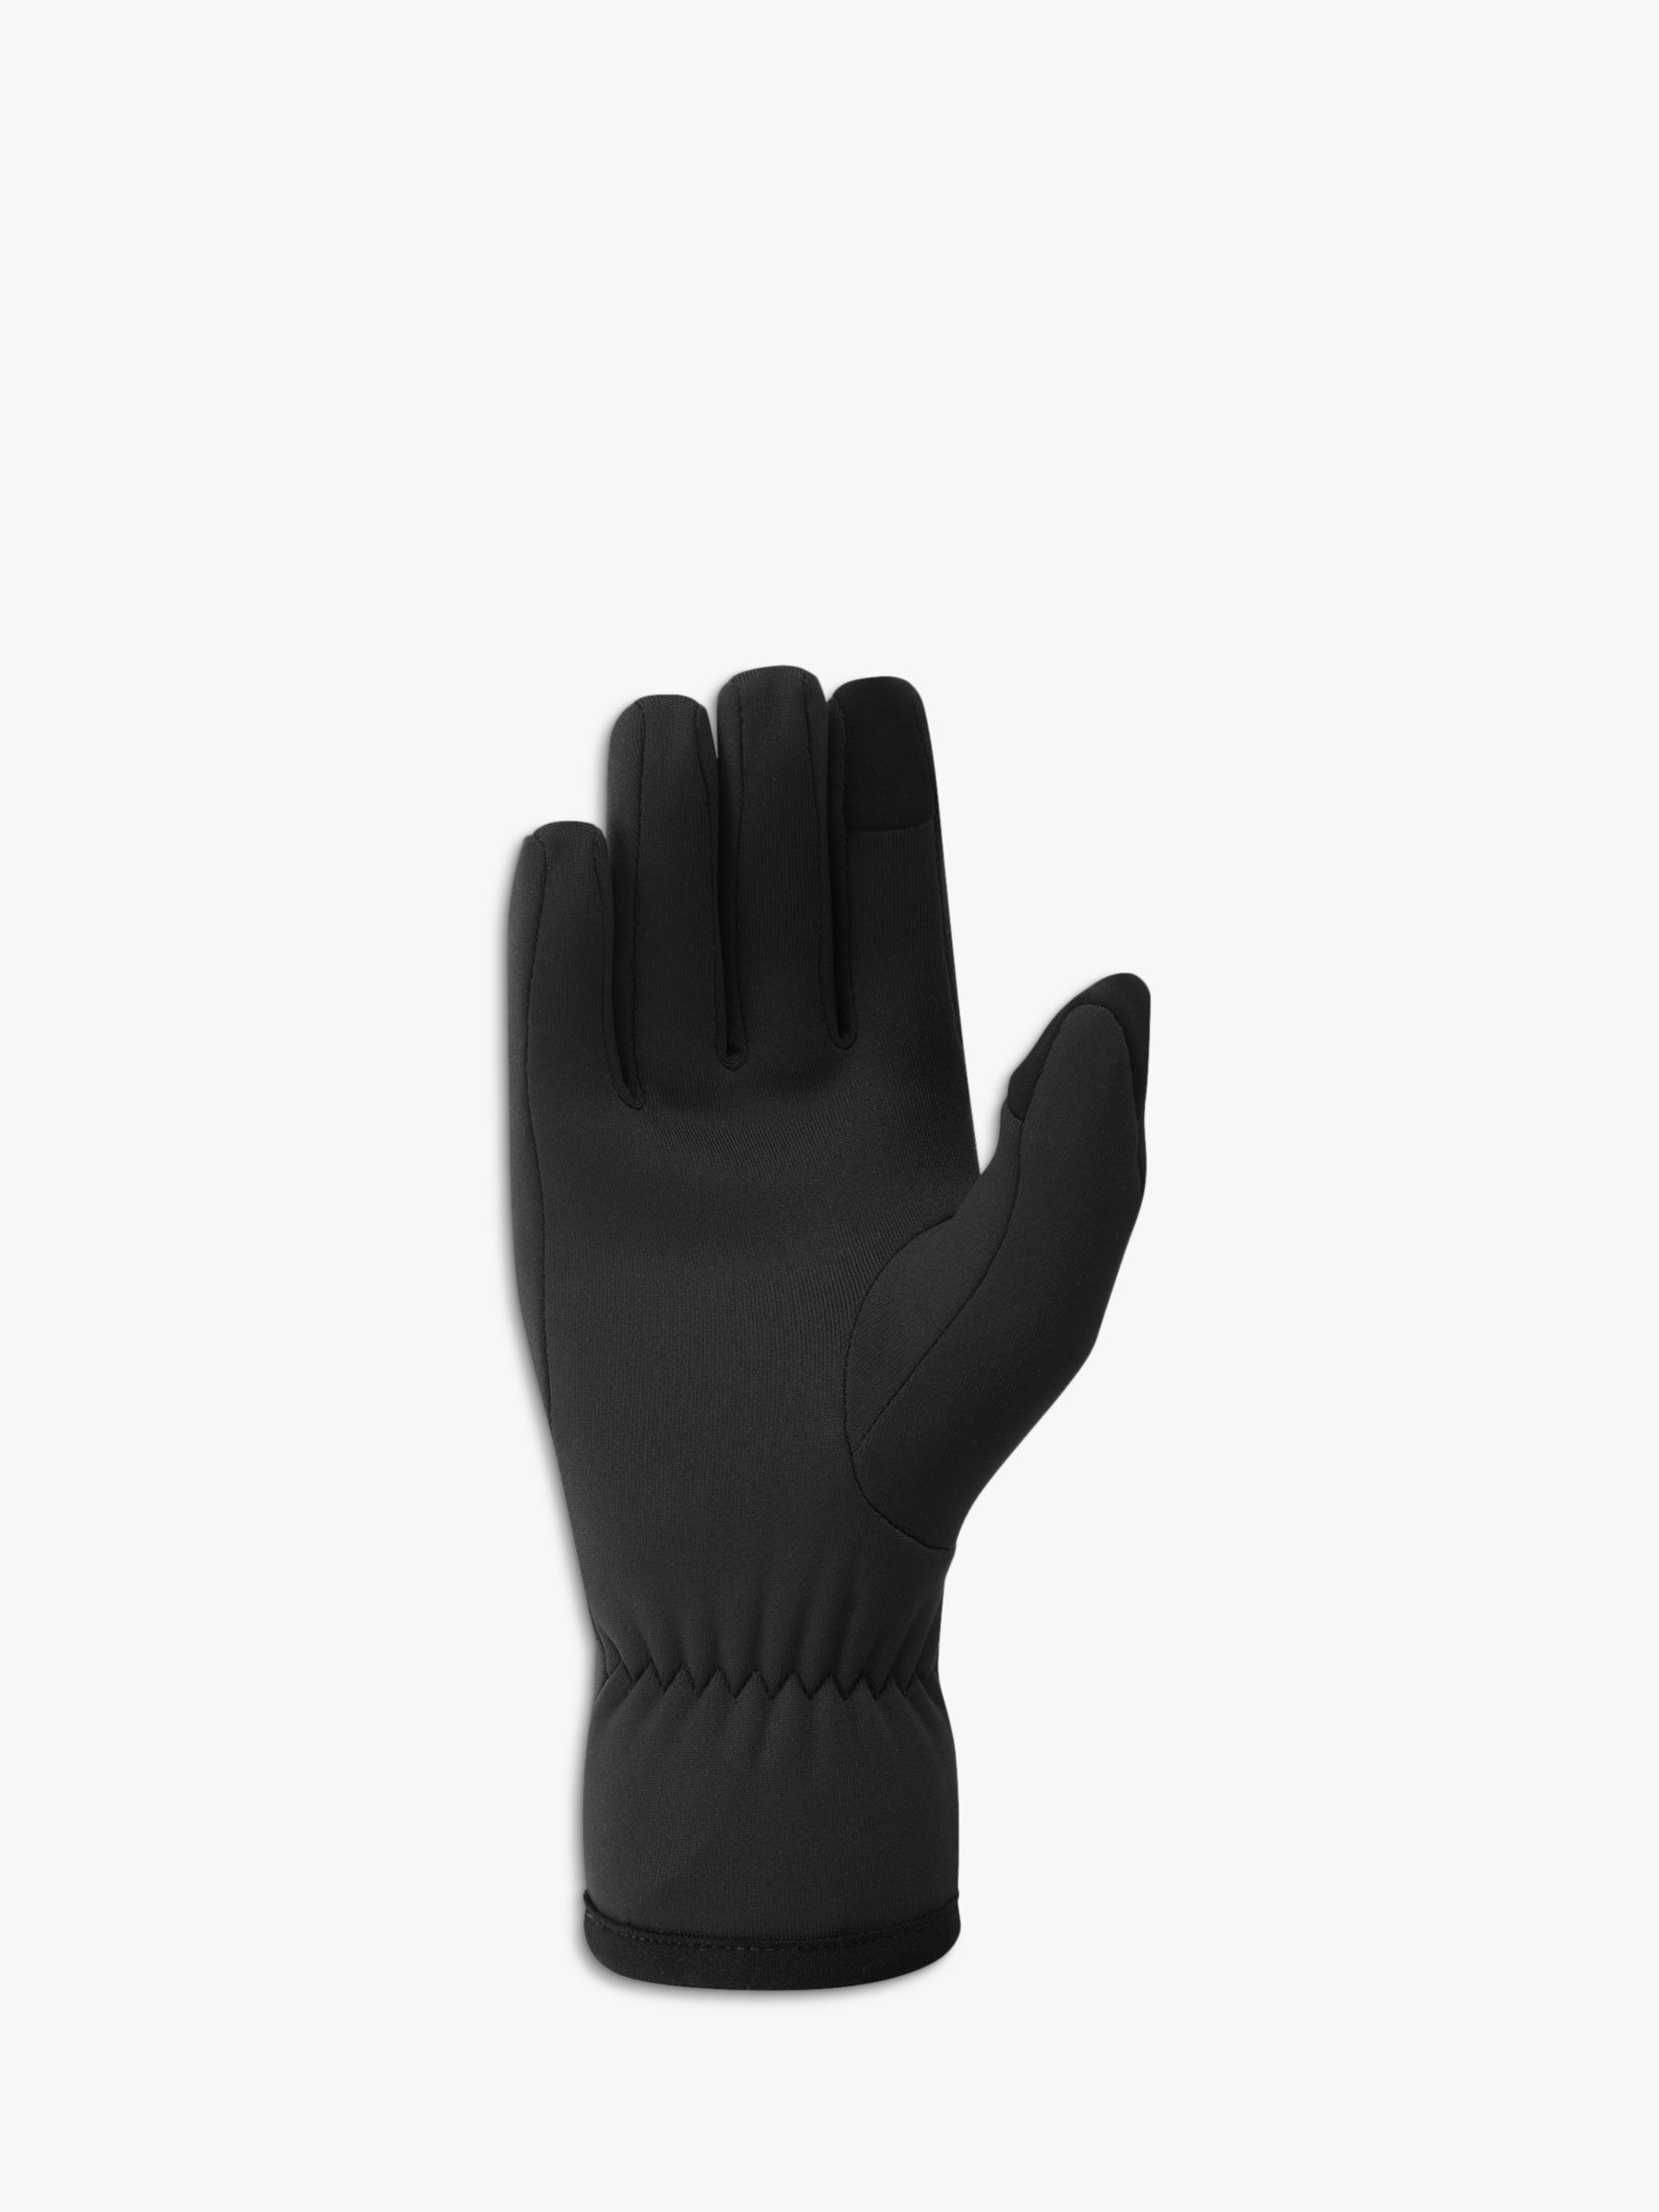 Montane Men's Fury Fleece Gloves, Black, S